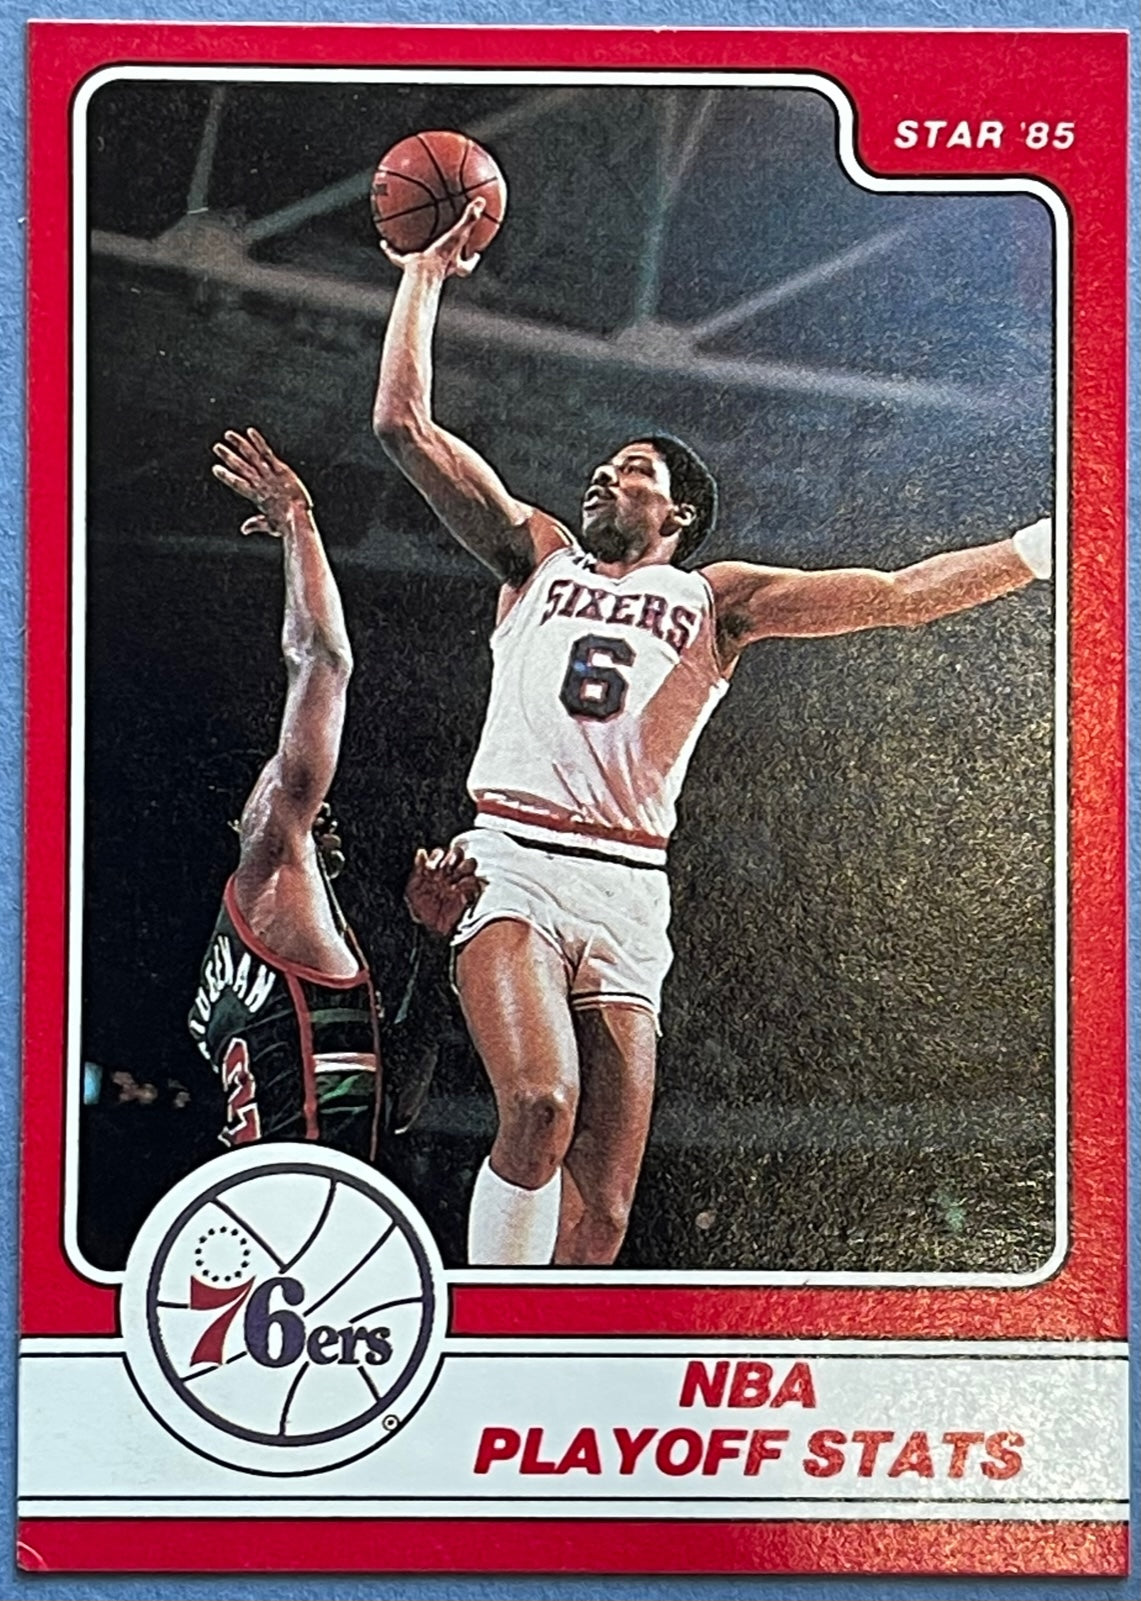 1984 Star Julius Erving #6 Julius Erving NBA Playoff Stats Card